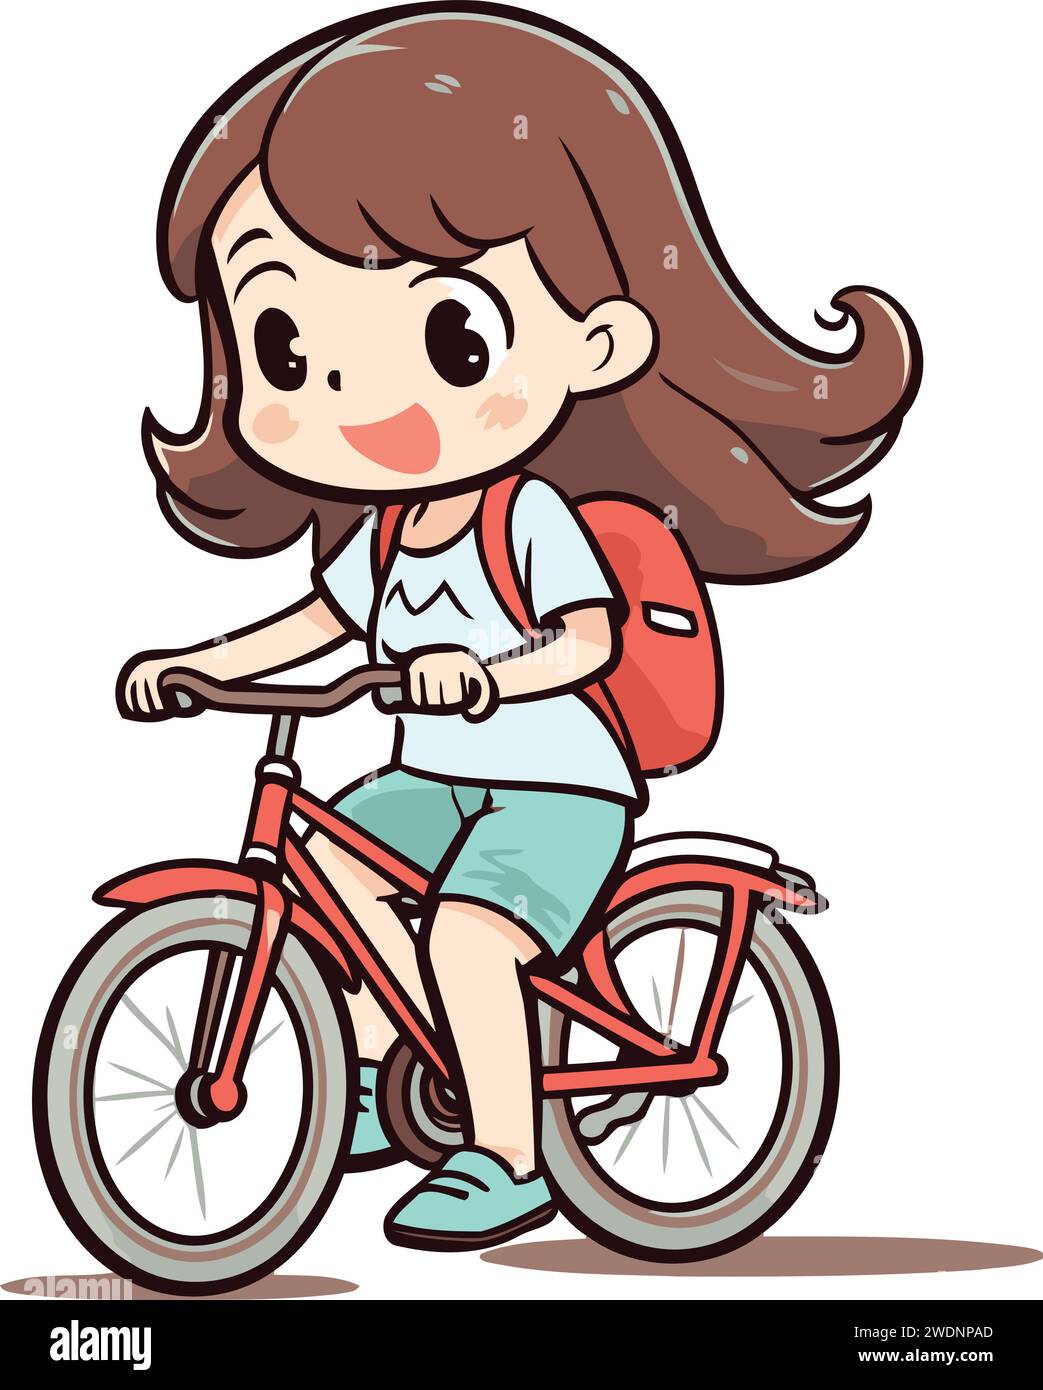 Illustration of a Cute Little Girl Riding a Bike   Vector Stock Vector